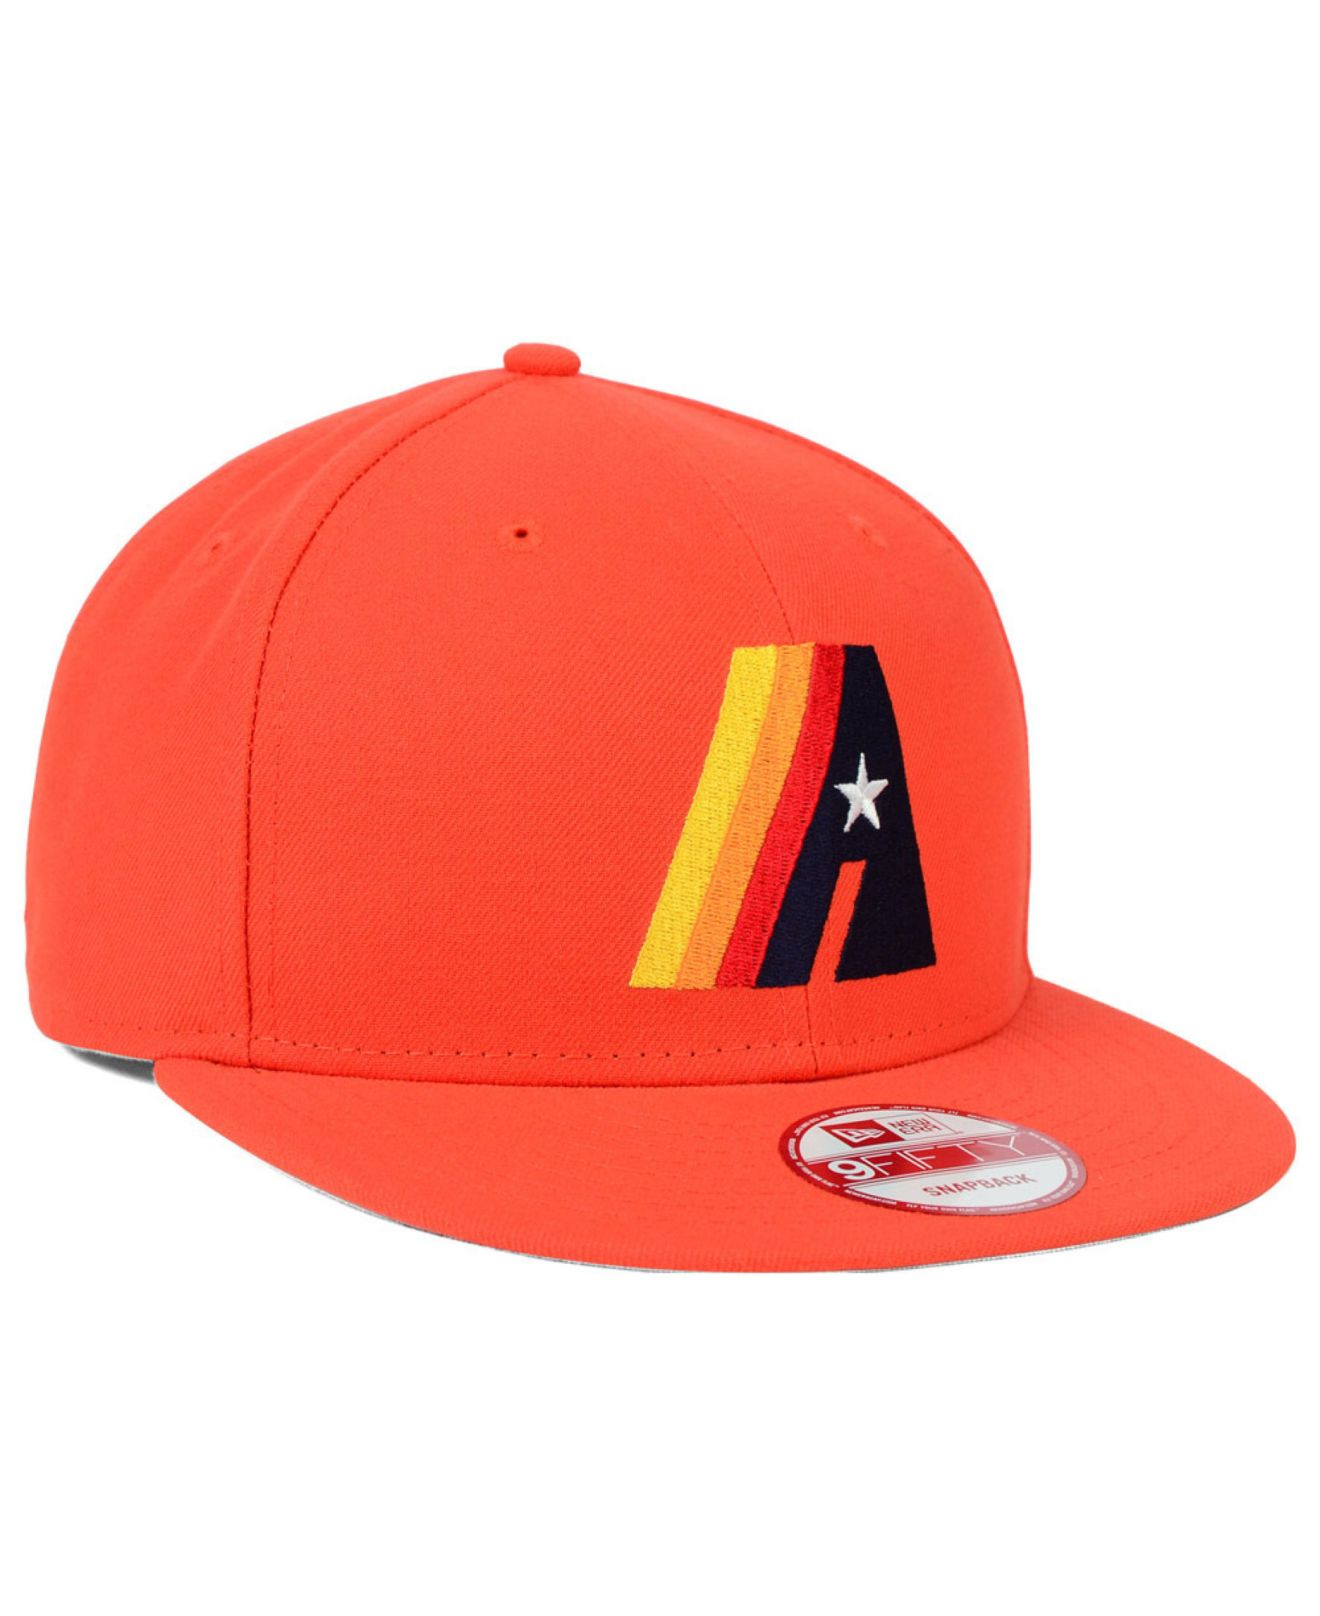 Houston Astros Fanatics Branded True Classic Trucker Snapback Hat -  Orange/Natural